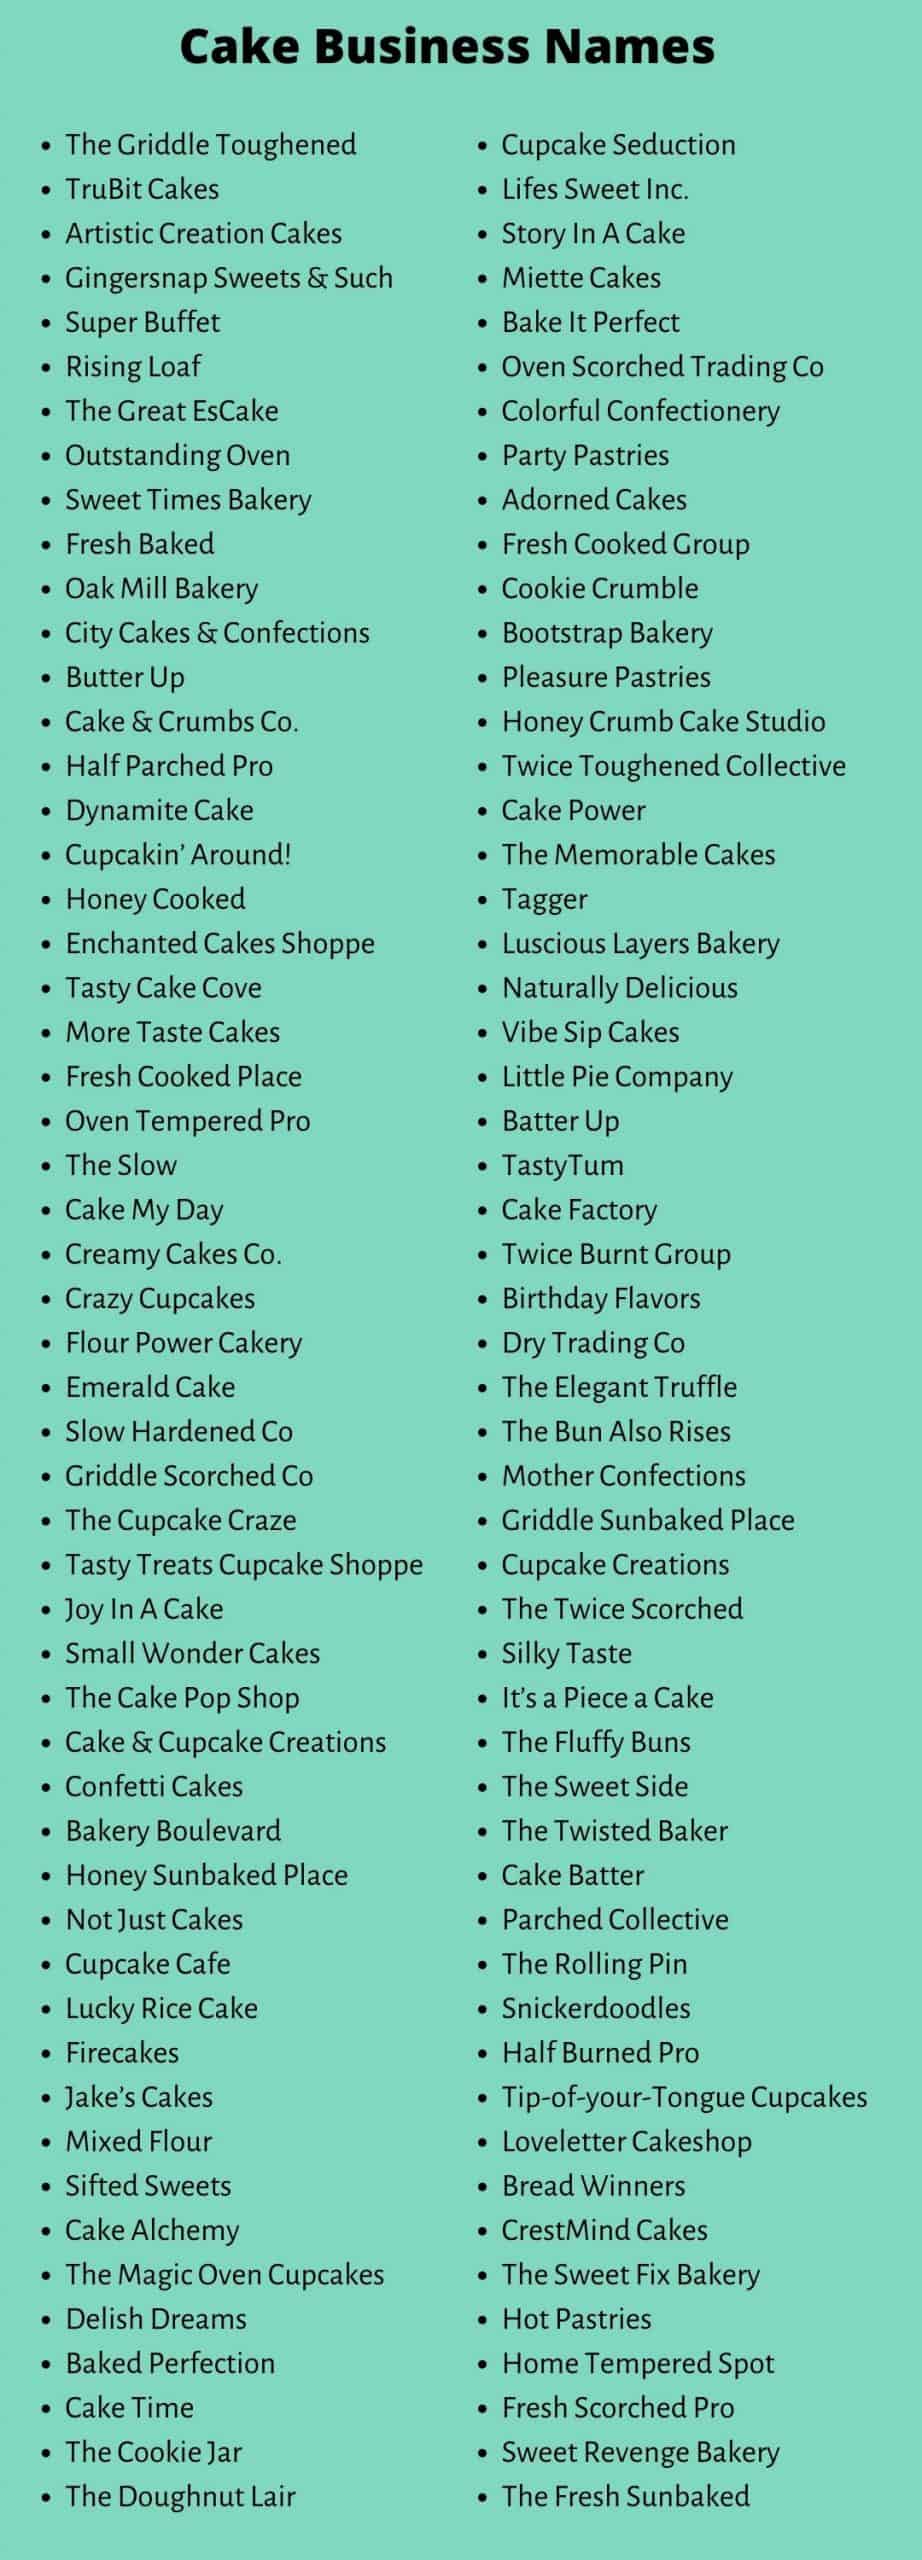 Cake Business Names